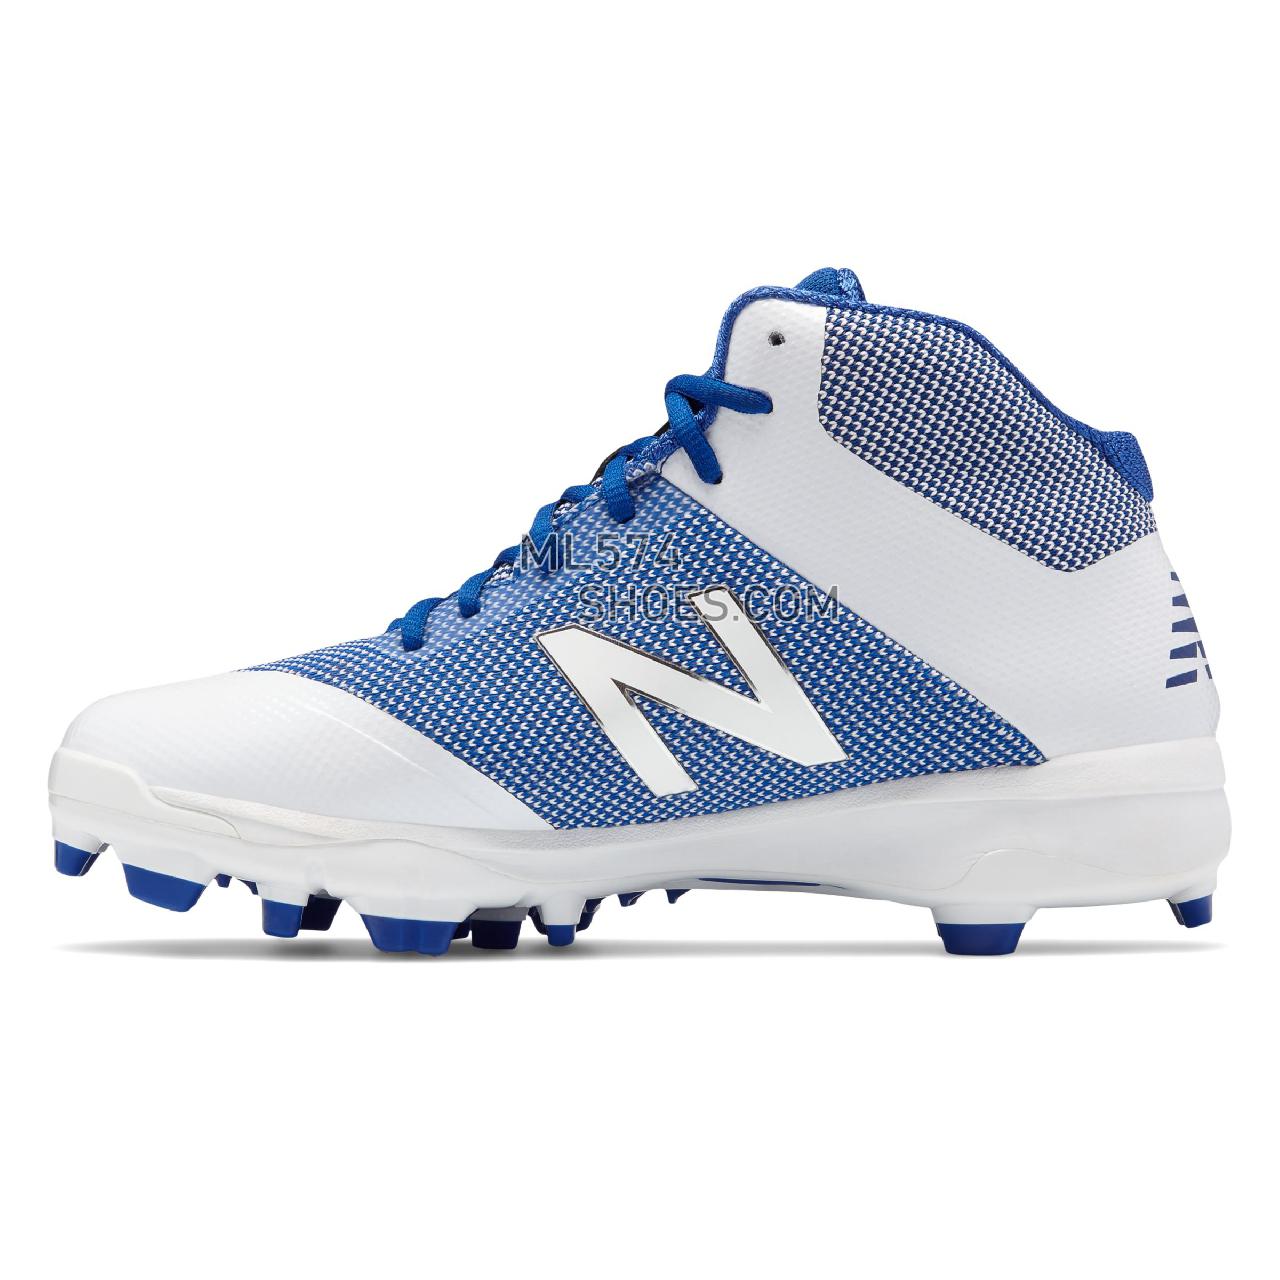 New Balance Mid-Cut TPU 4040v4 - Men's 4040 - Baseball Royal Blue with White - PM4040D4